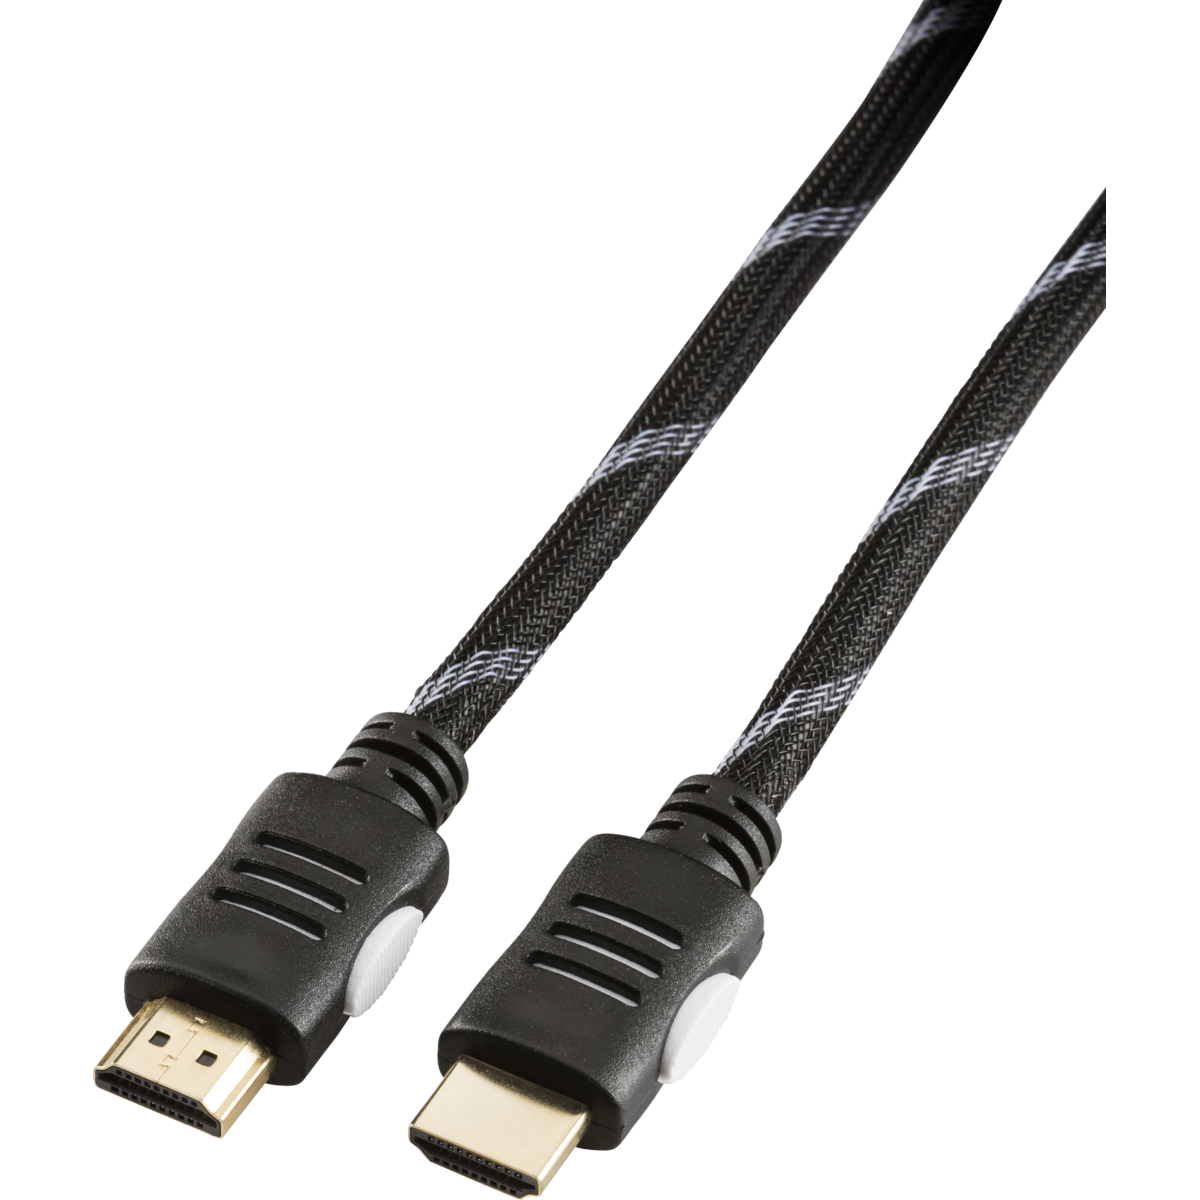 Knightsbridge AVHD4K10 4K High Speed HDMI Cable 10m